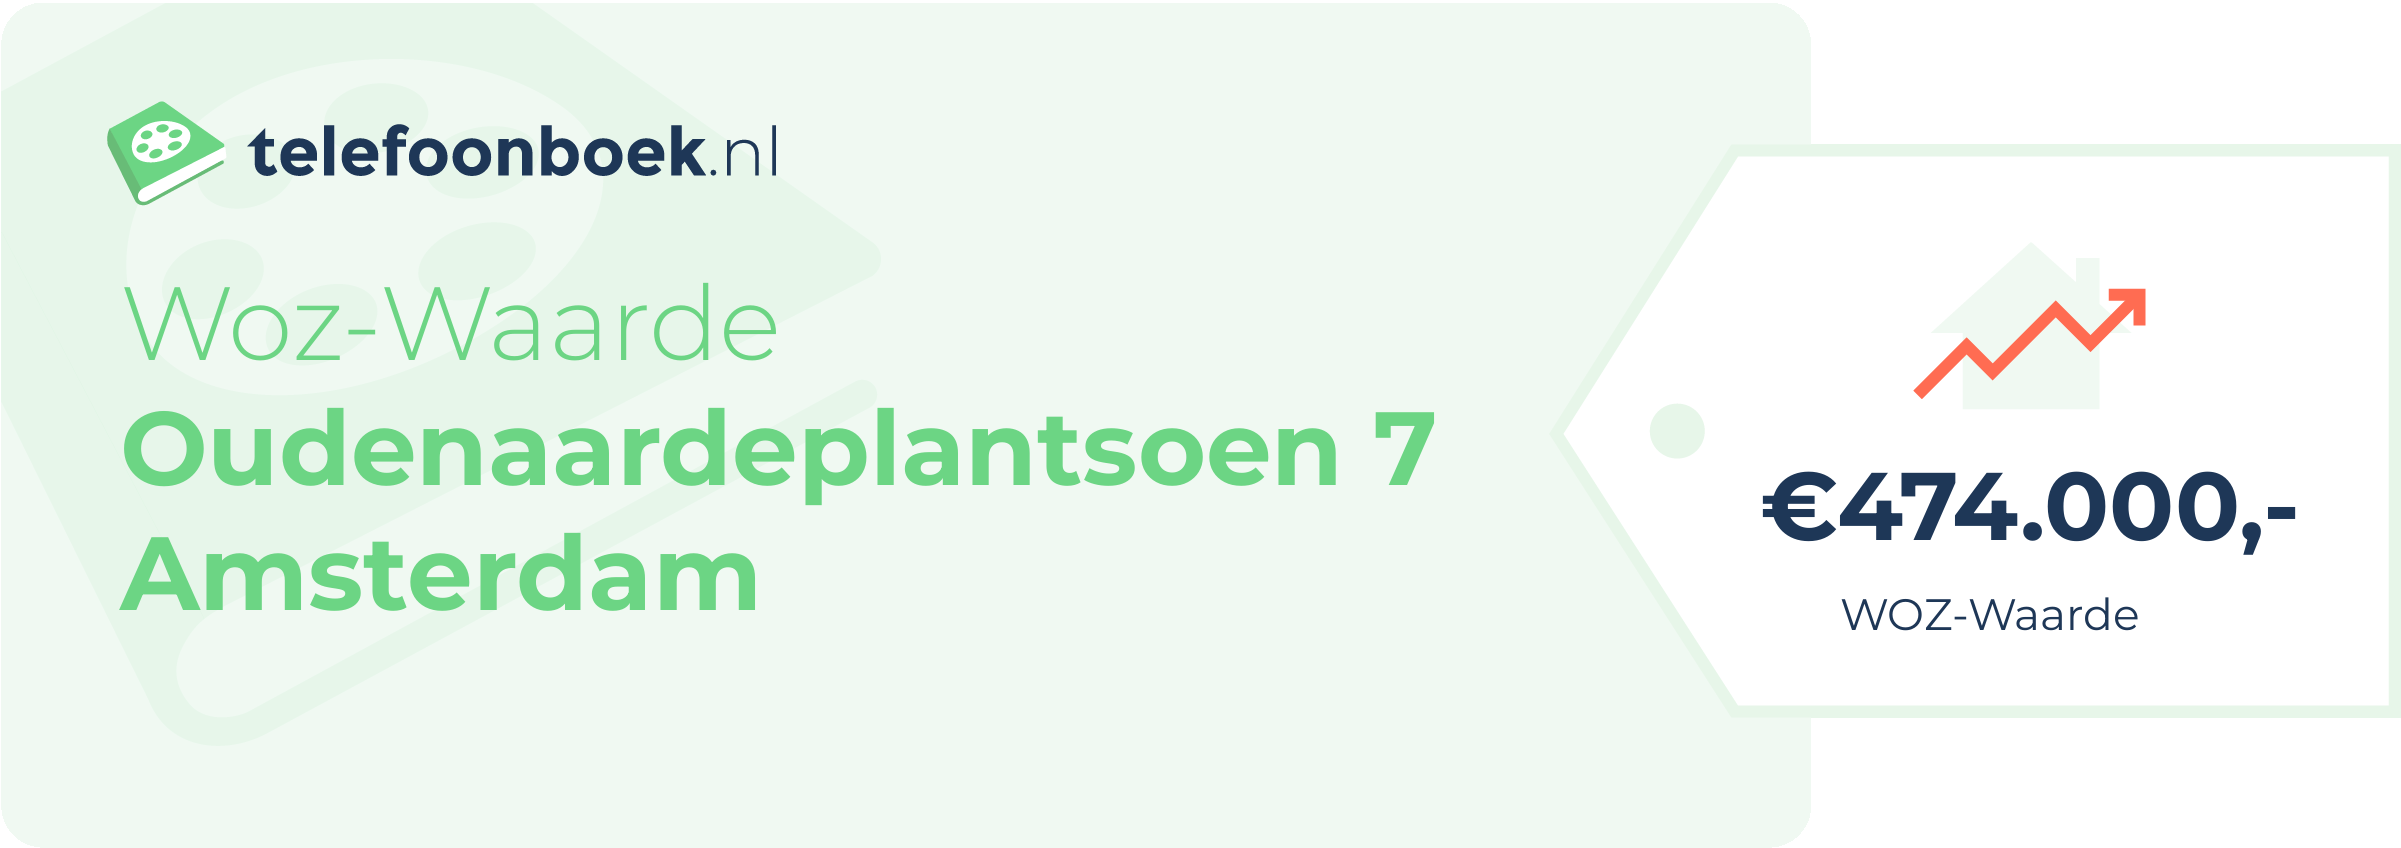 WOZ-waarde Oudenaardeplantsoen 7 Amsterdam